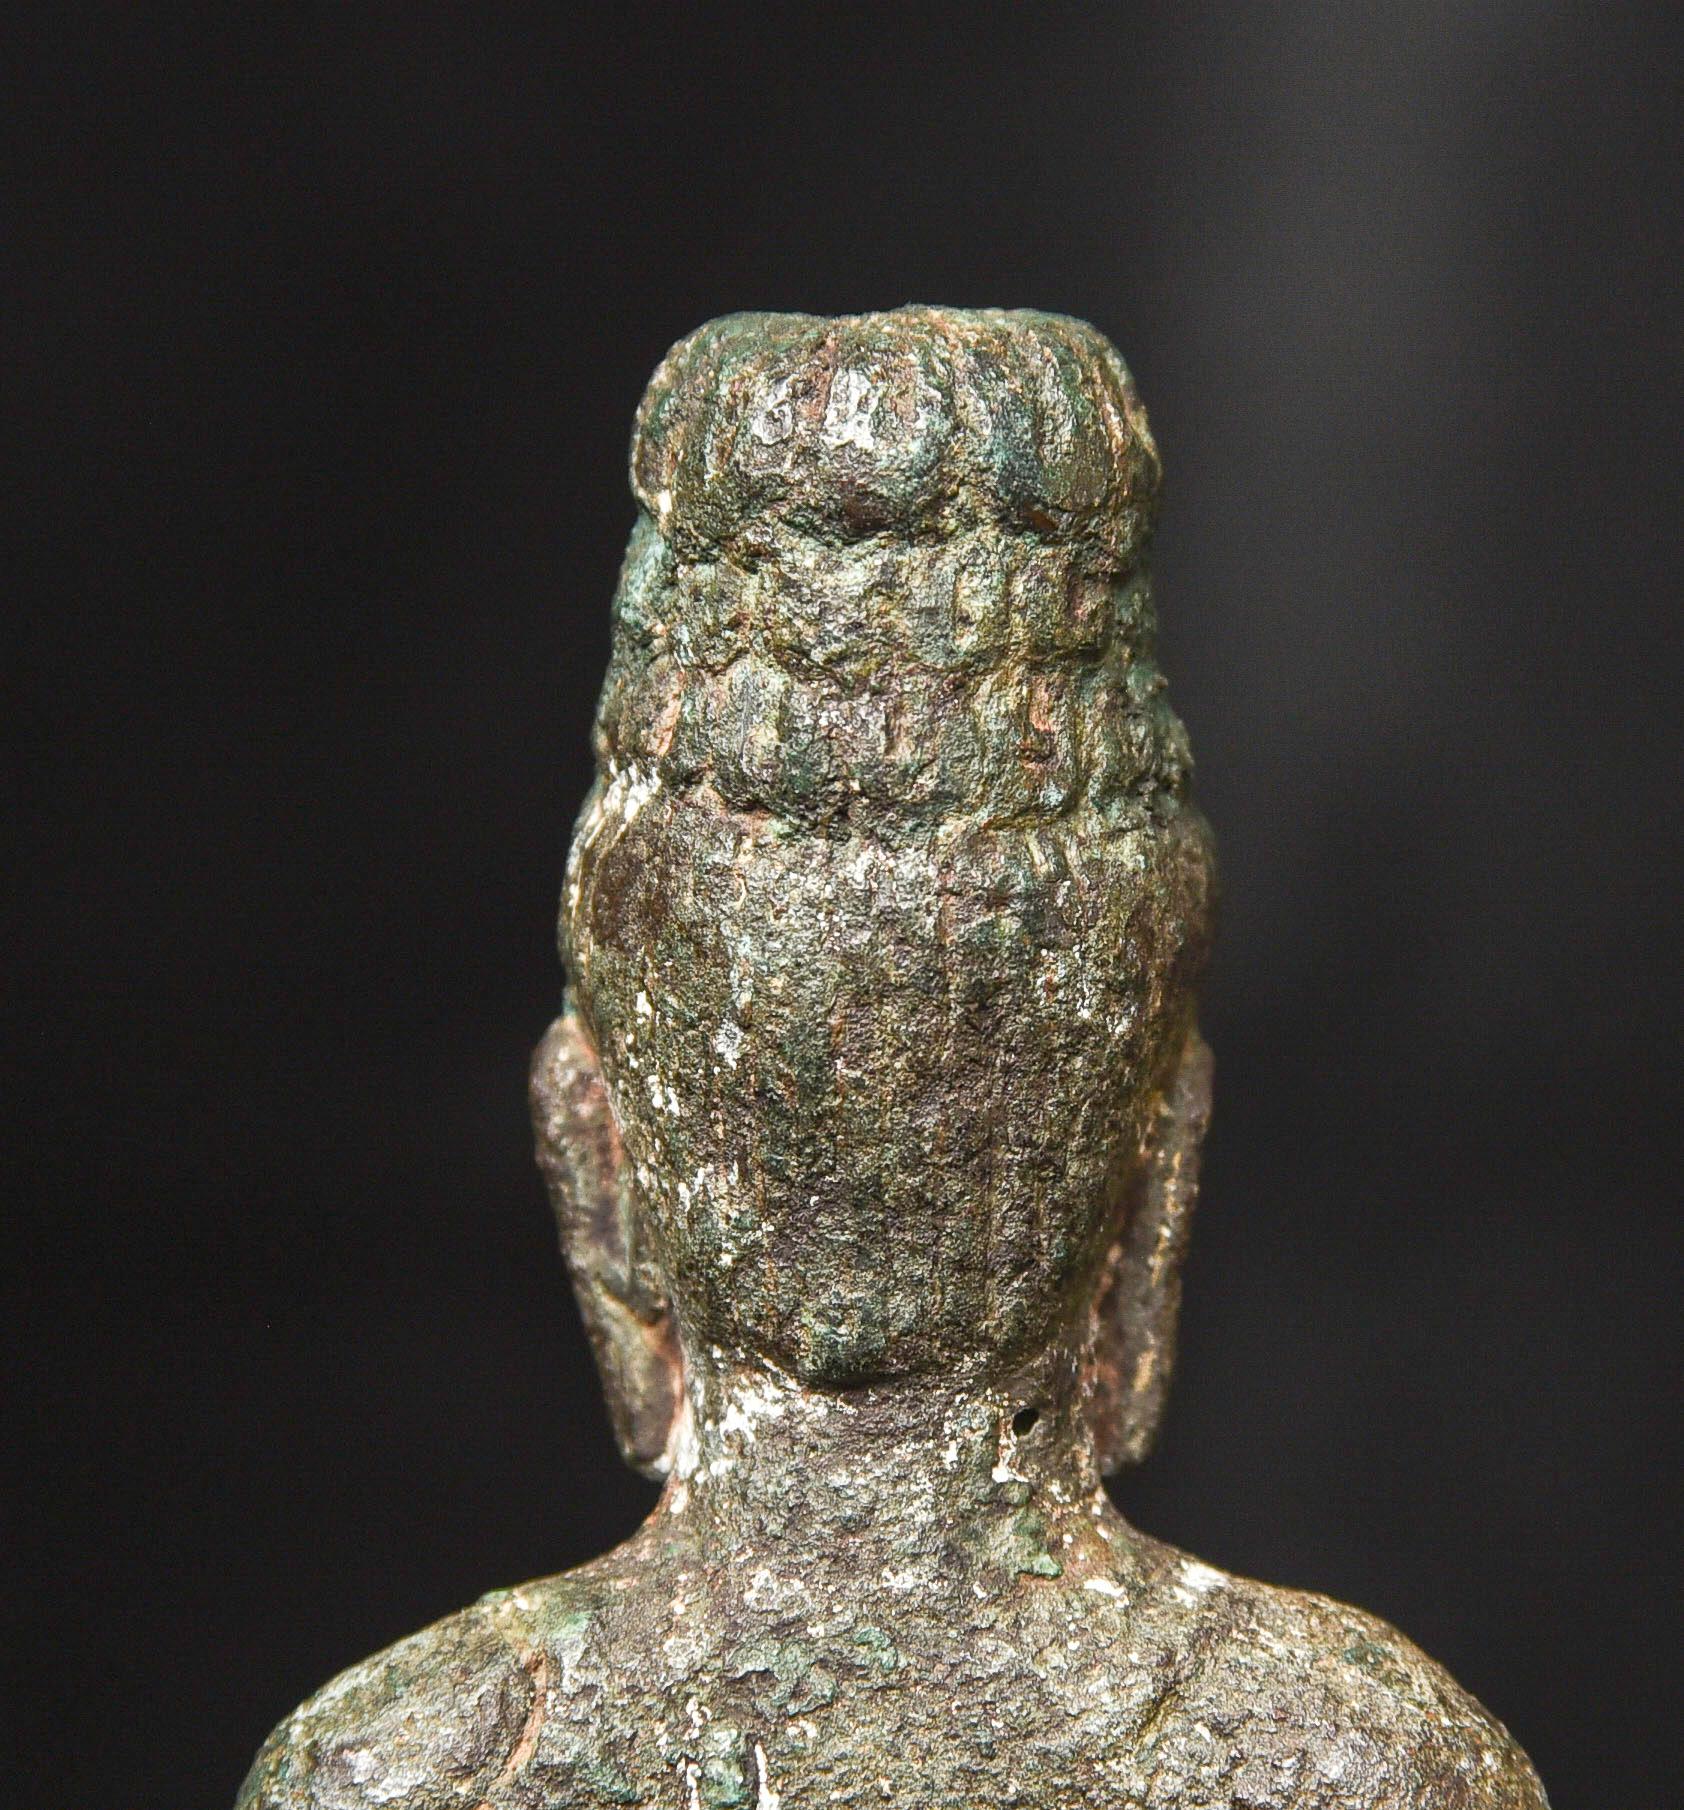 7th/9thC Solid-Cast Bronze Prakhon Chai Buddha or Bodhisattva - 9688 For Sale 10